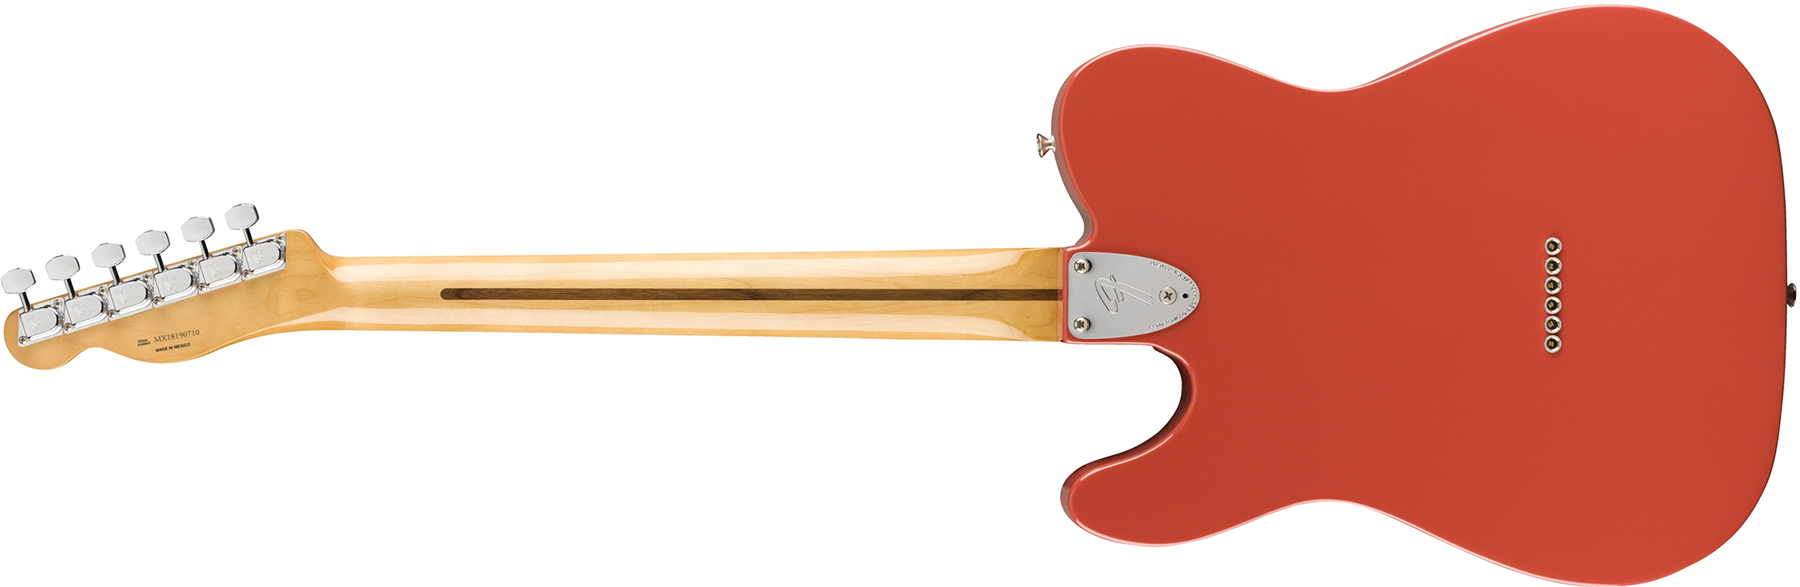 Fender Tele 70s Custom Vintera Vintage Mex Hh Pf - Fiesta Red - Tel shape electric guitar - Variation 1